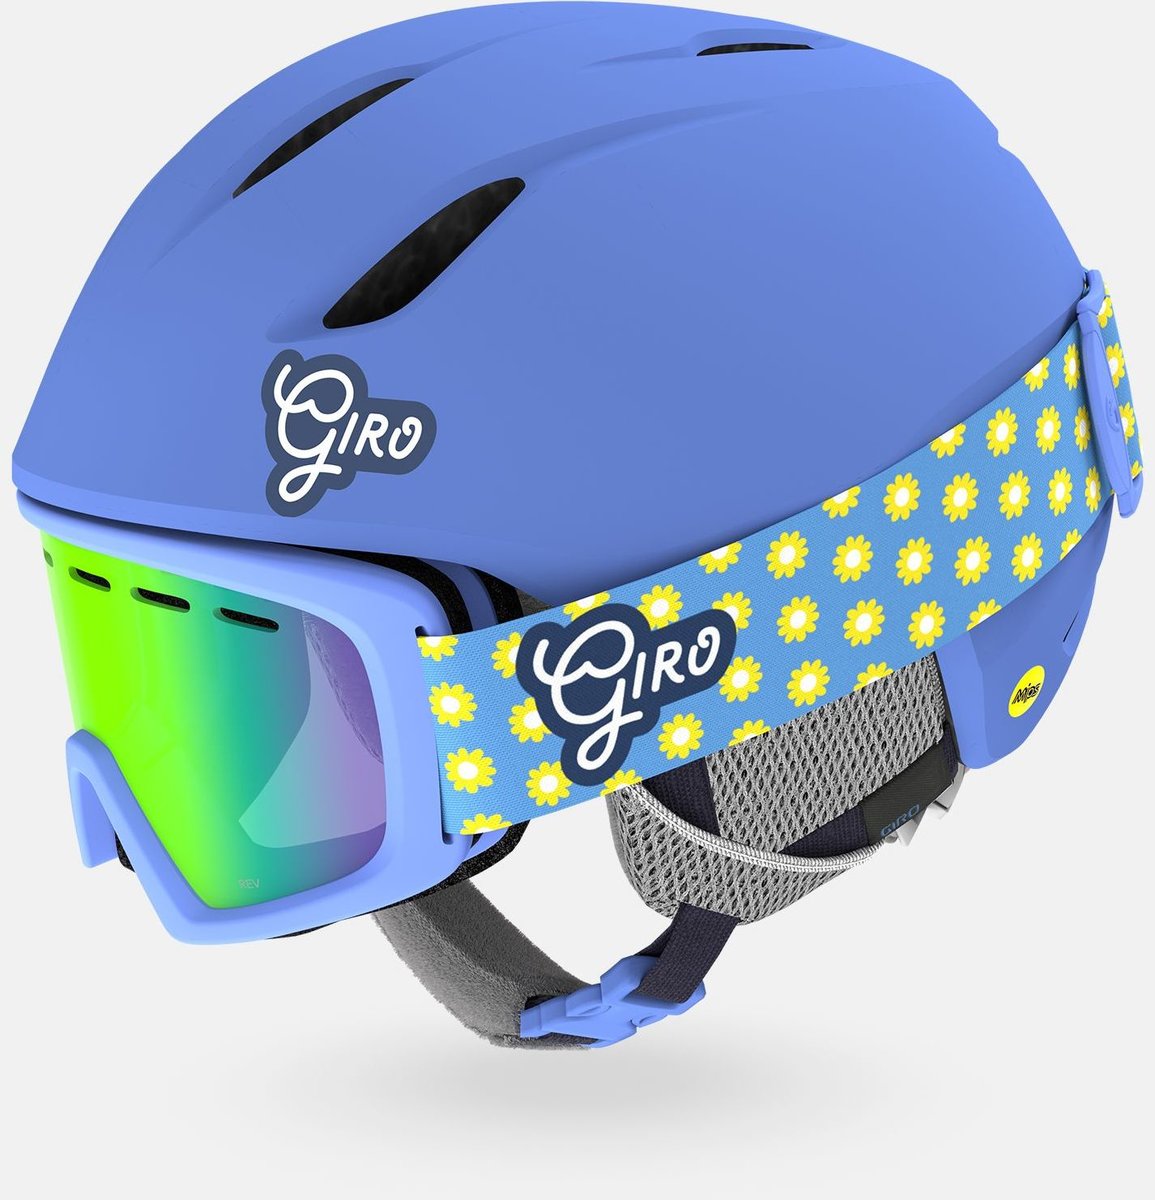 Giro Launch Youth Combo Pack